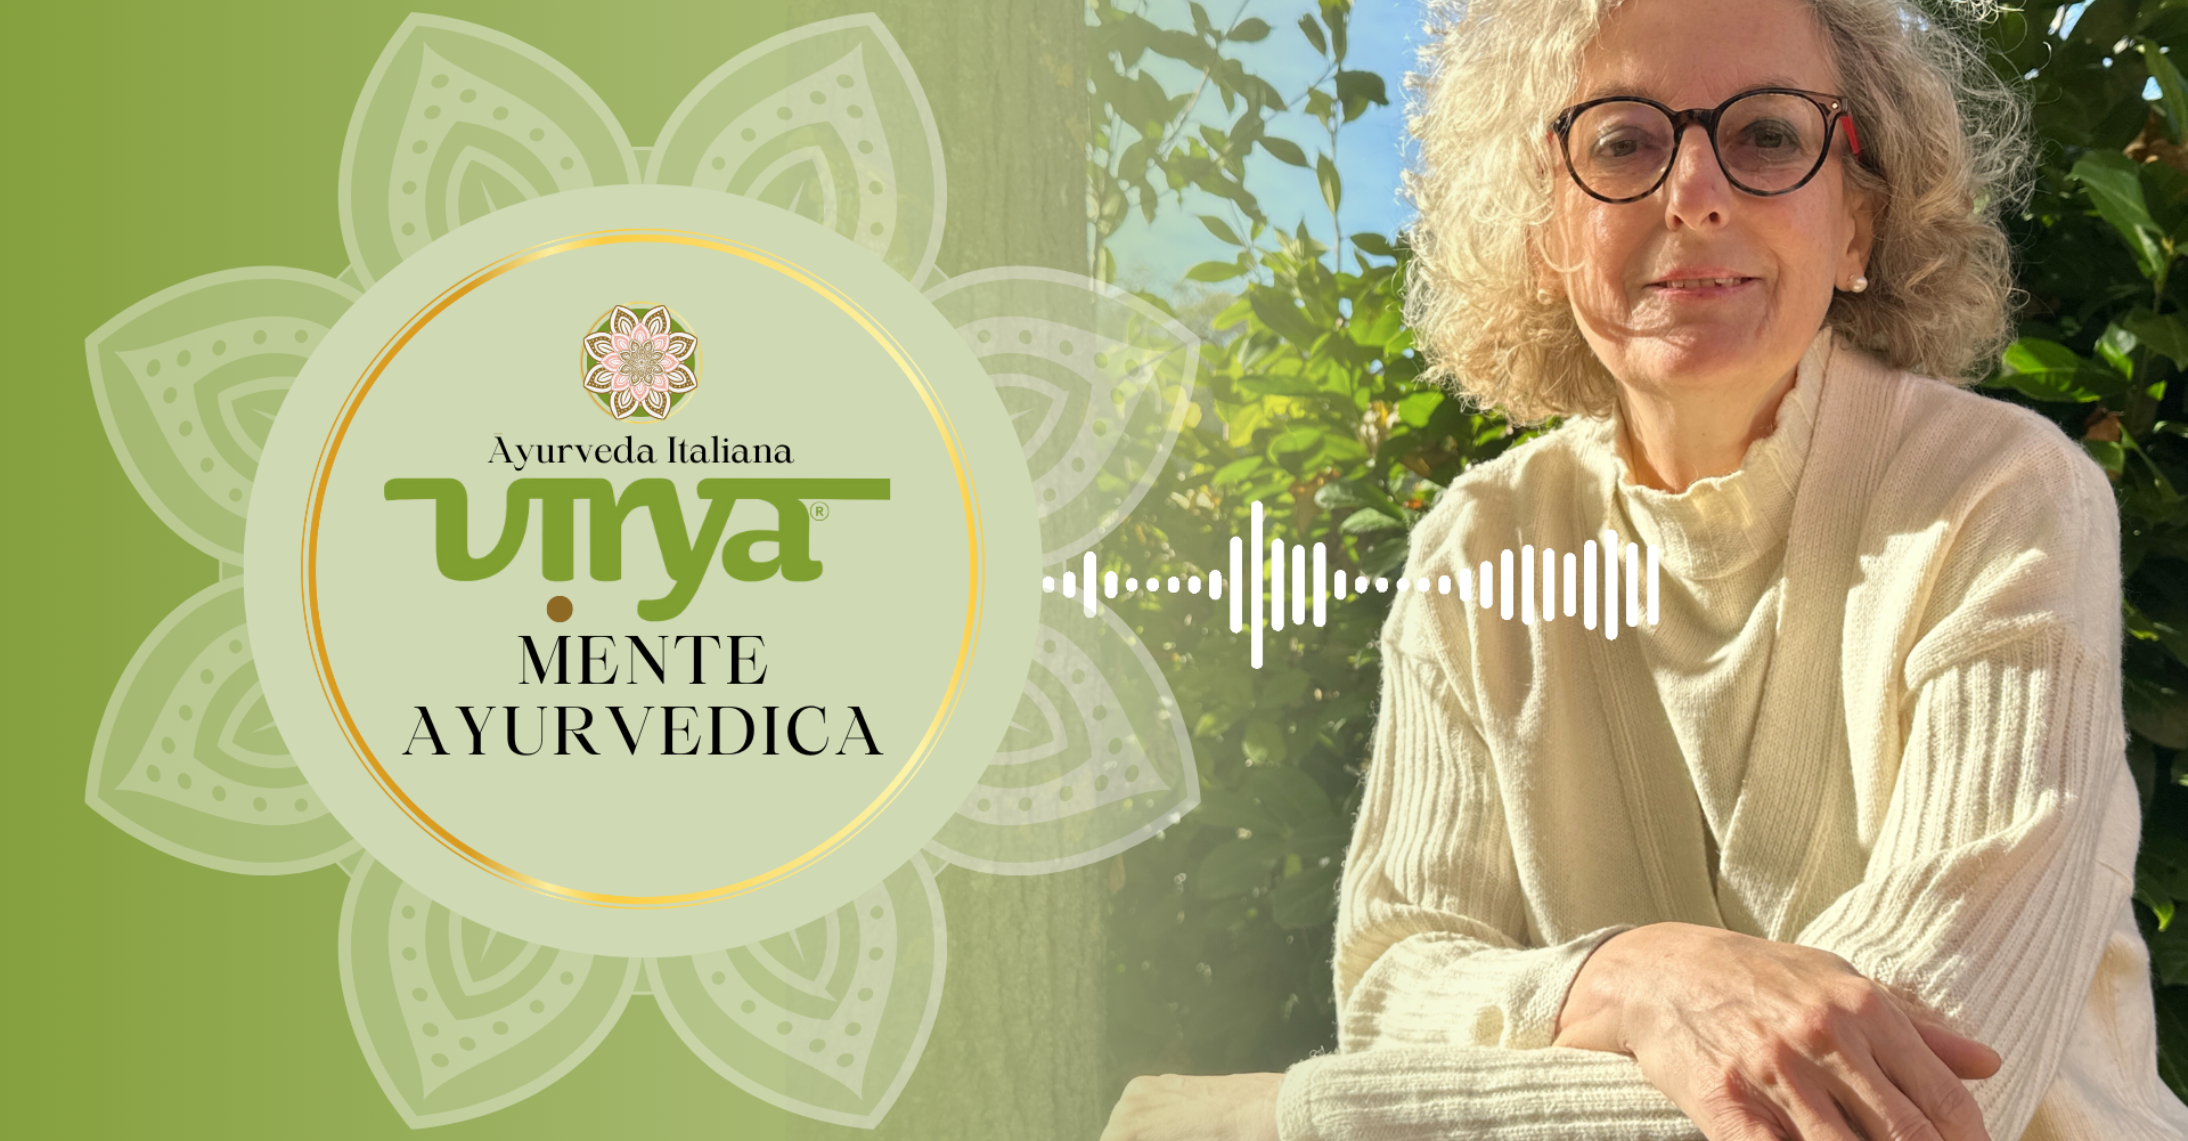 Presentazione Podcast Mente Ayurvedica: Virya® Ayurveda Italiana